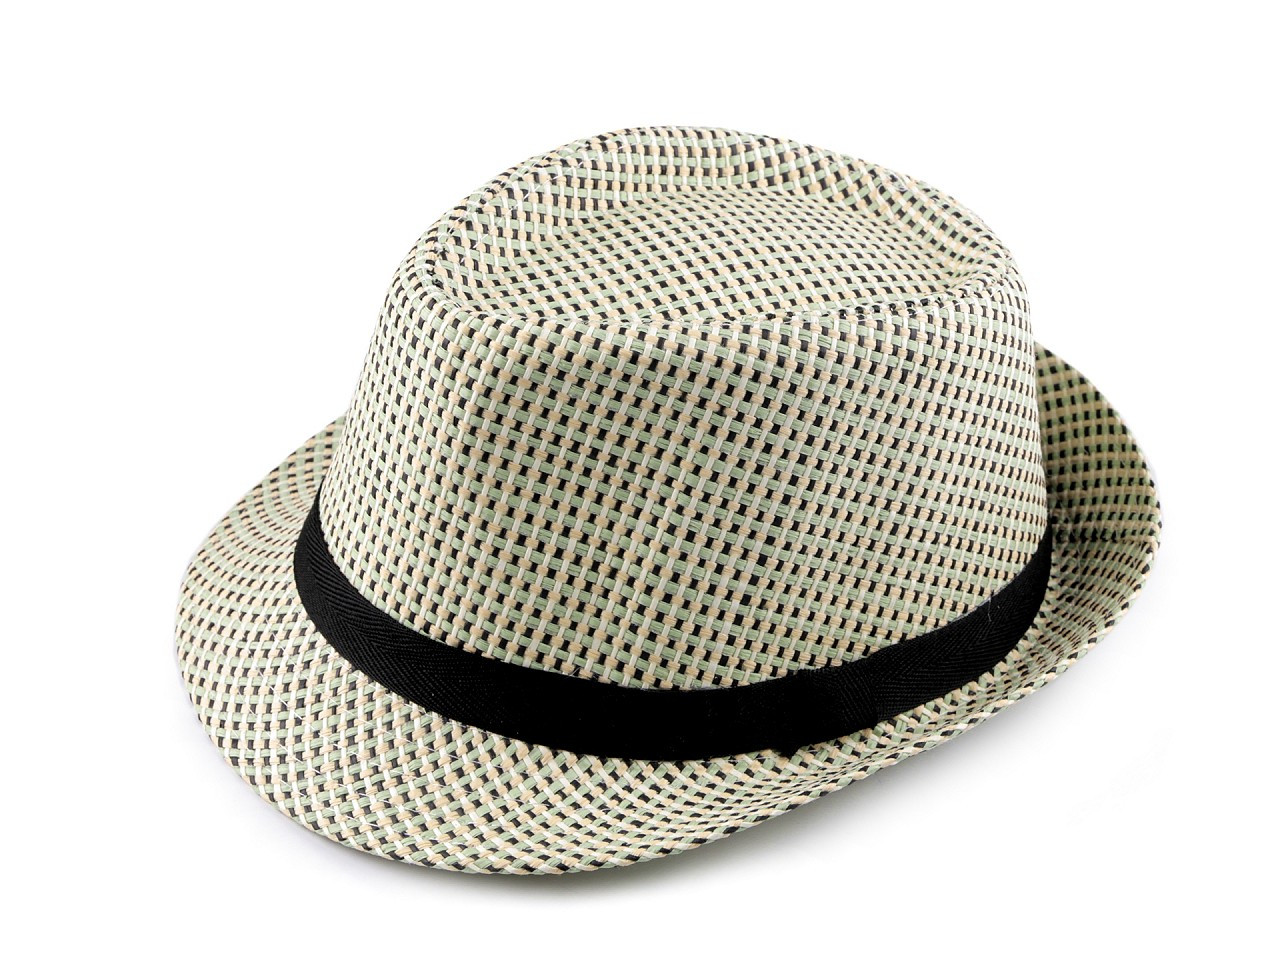 Letní klobouk / slamák unisex, barva 6 (vel. 59) mint